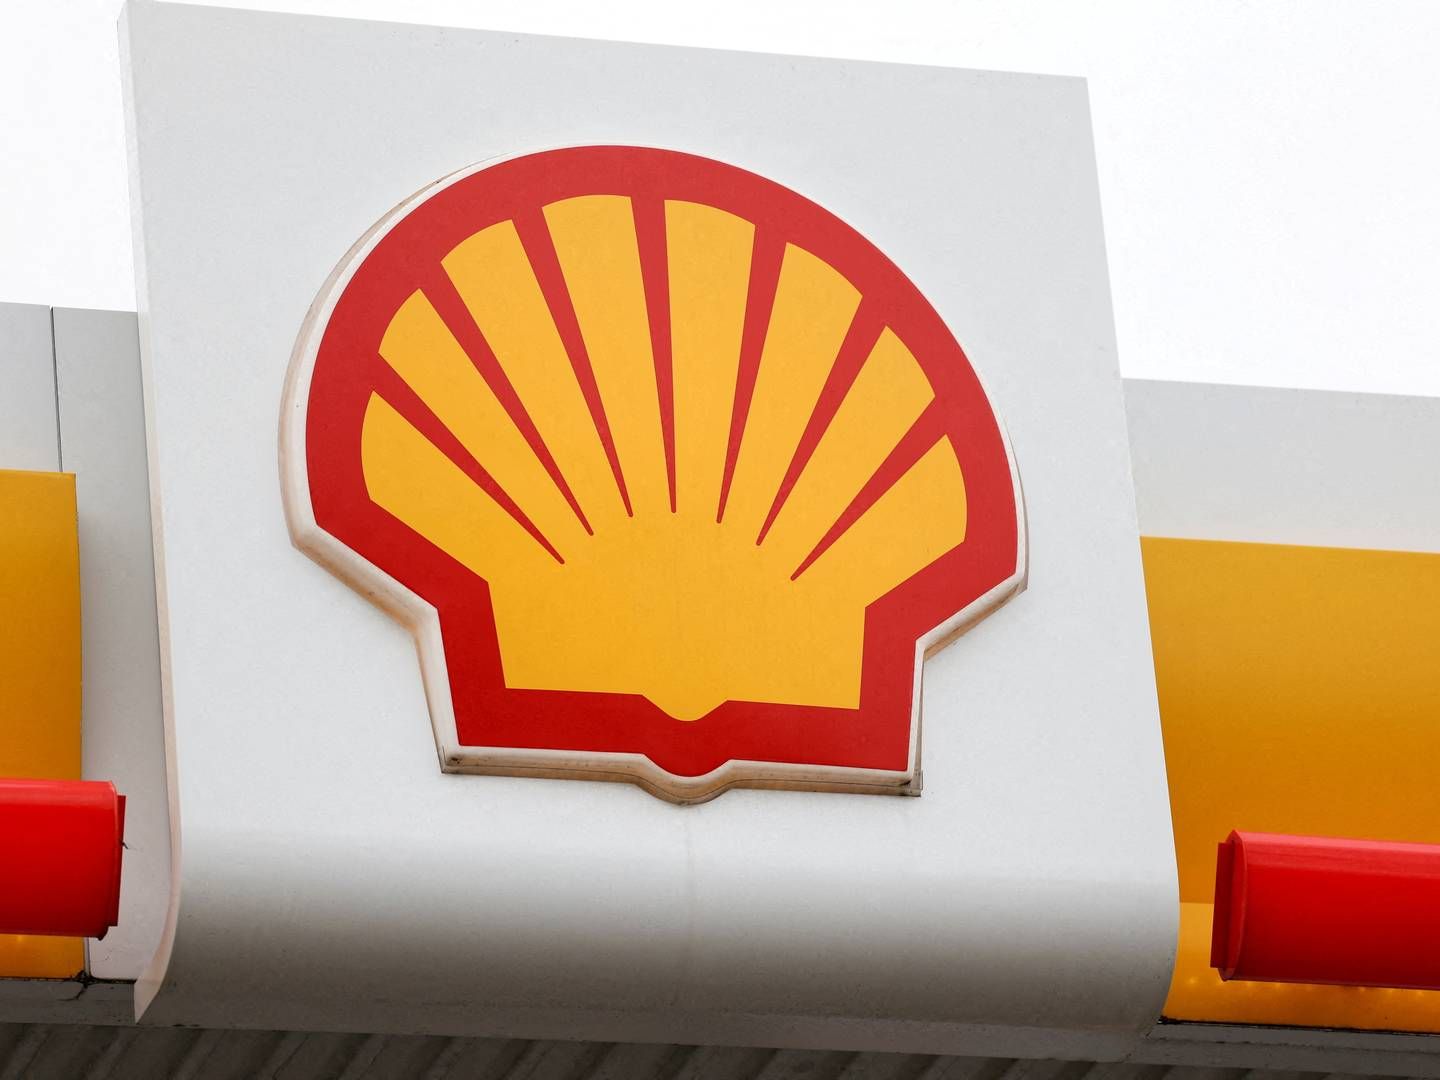 Shell afholder generalforsamling tirsdag. | Foto: May James/Reuters/Ritzau Scanpix